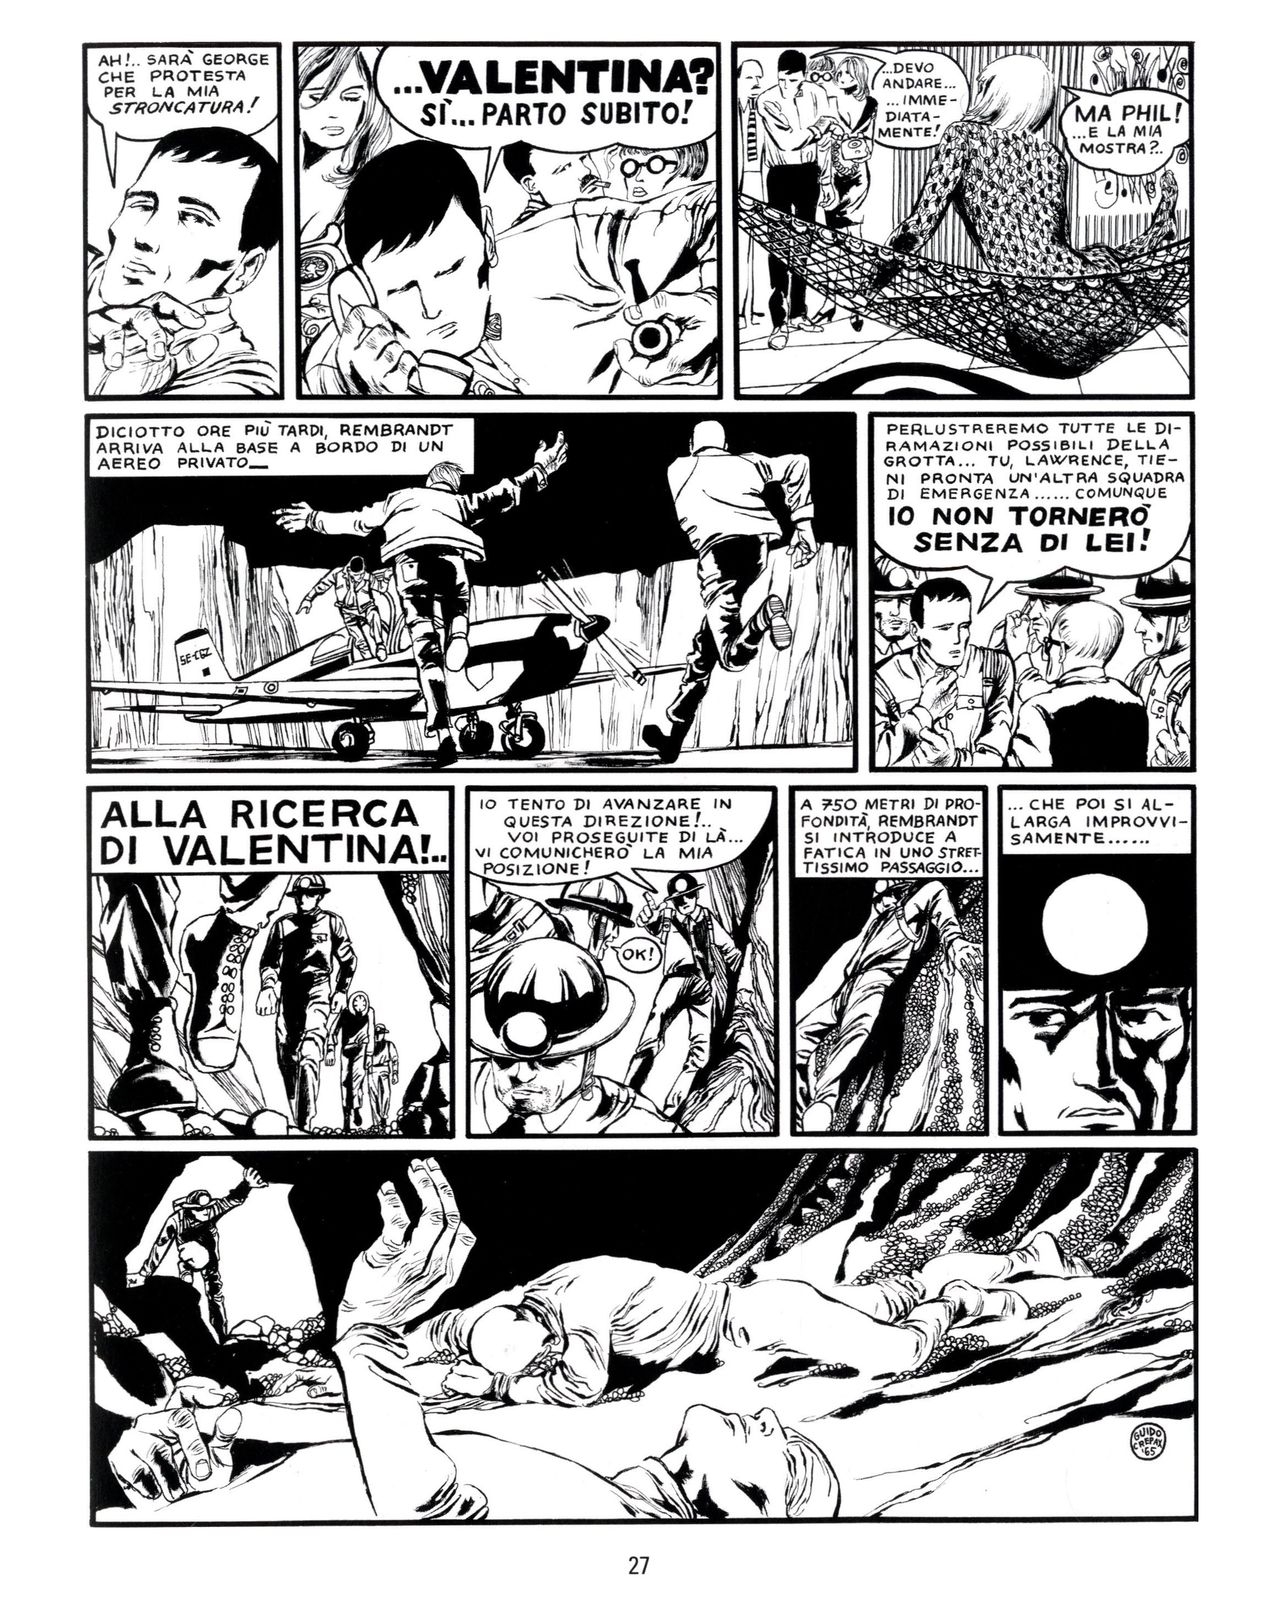 [Guido Crepax] Erotica Fumetti #25 : L'ascesa dei sotterranei : I cavalieri ciechi [Italian] 28